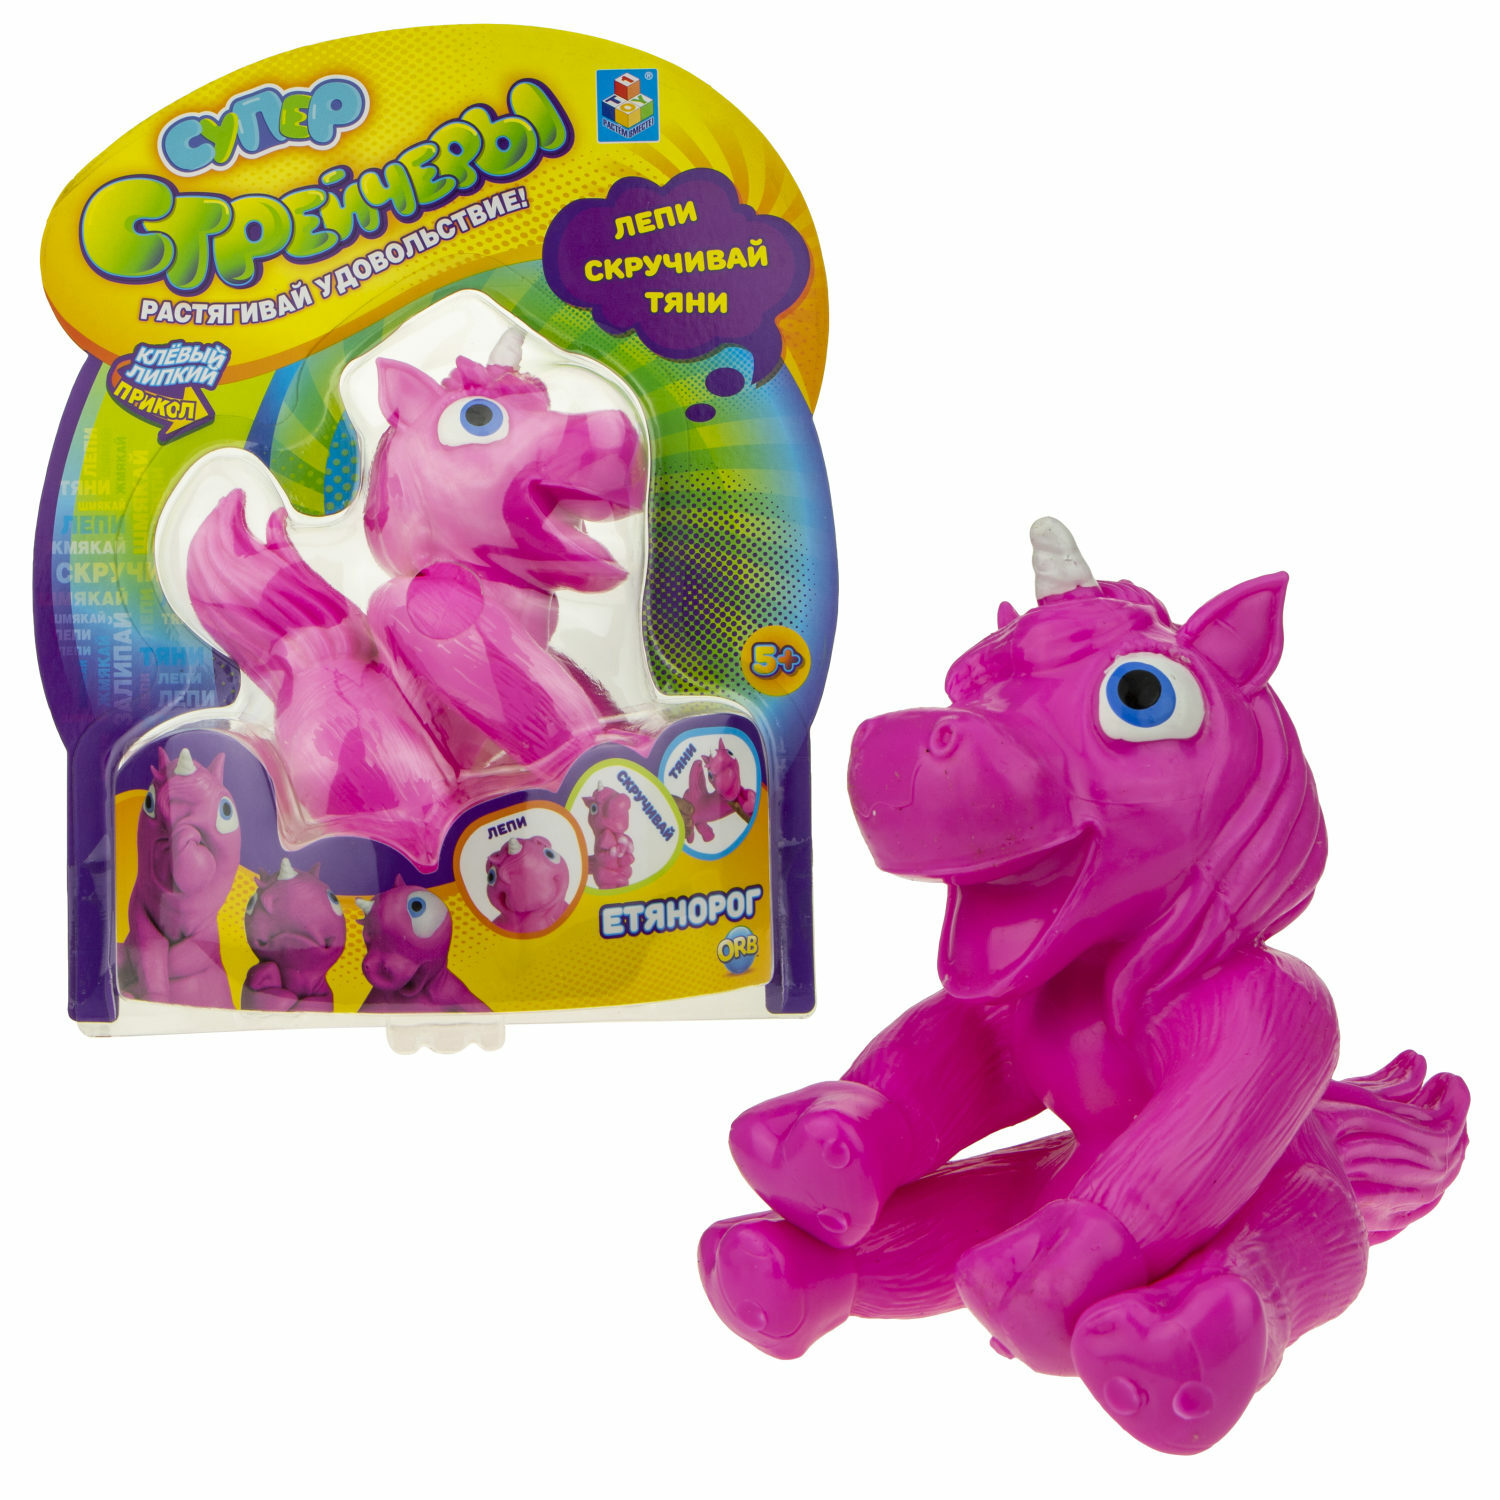 Фигурка Супер стрейчеры Етянорог тянущаяся игрушка блистер 16см розовый - фото 3